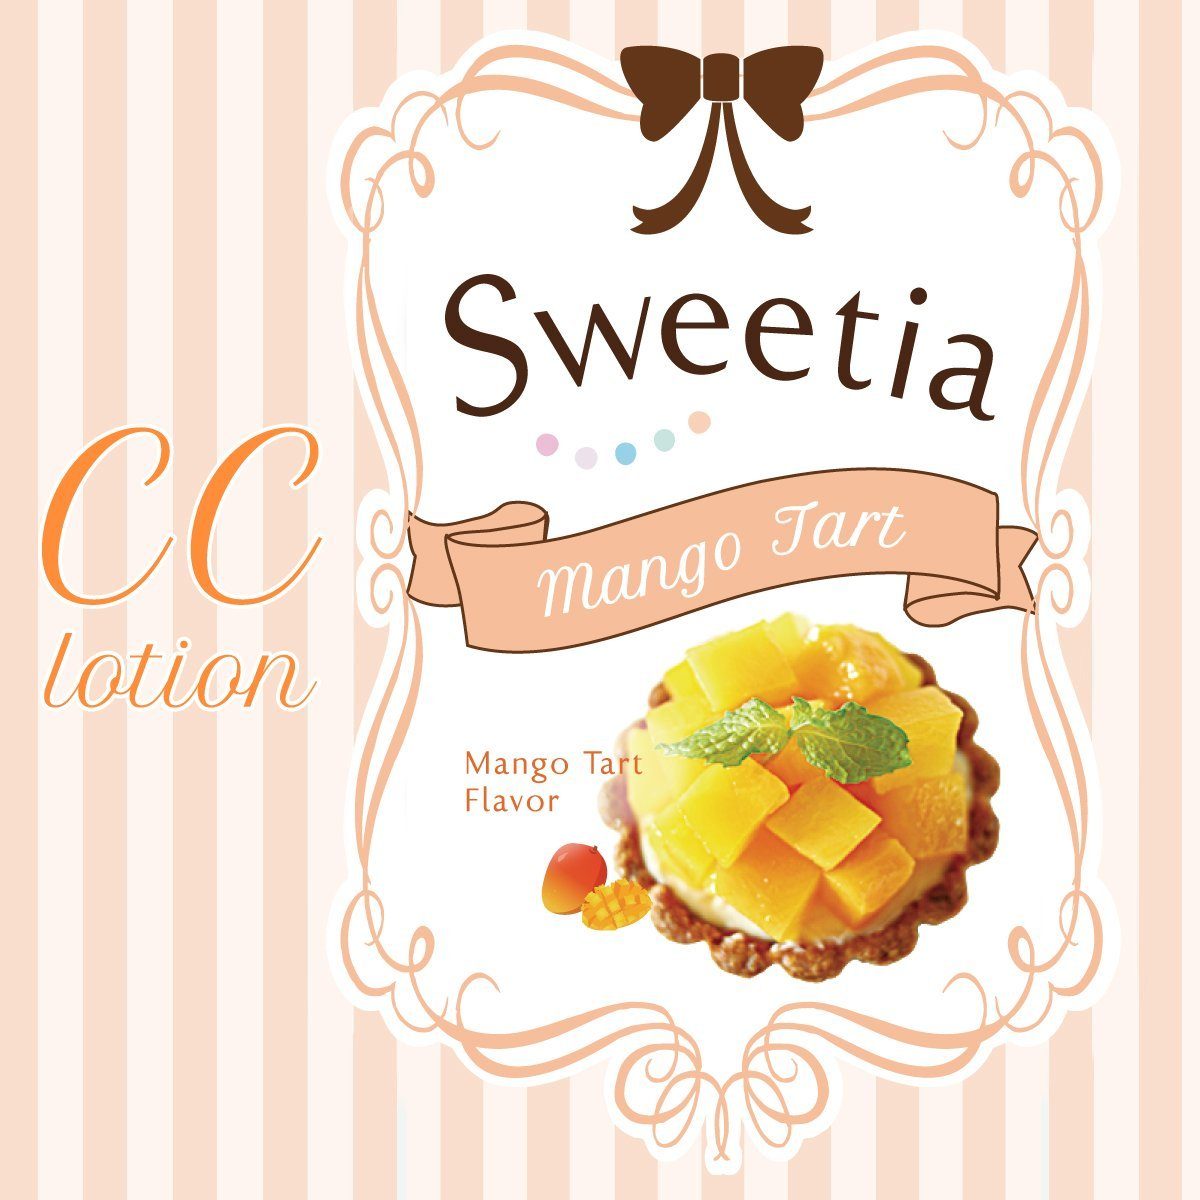 SSI JAPAN CC lotion Sweetia 芒果蛋撻味可食用潤滑液 100 毫升 潤滑液 購買